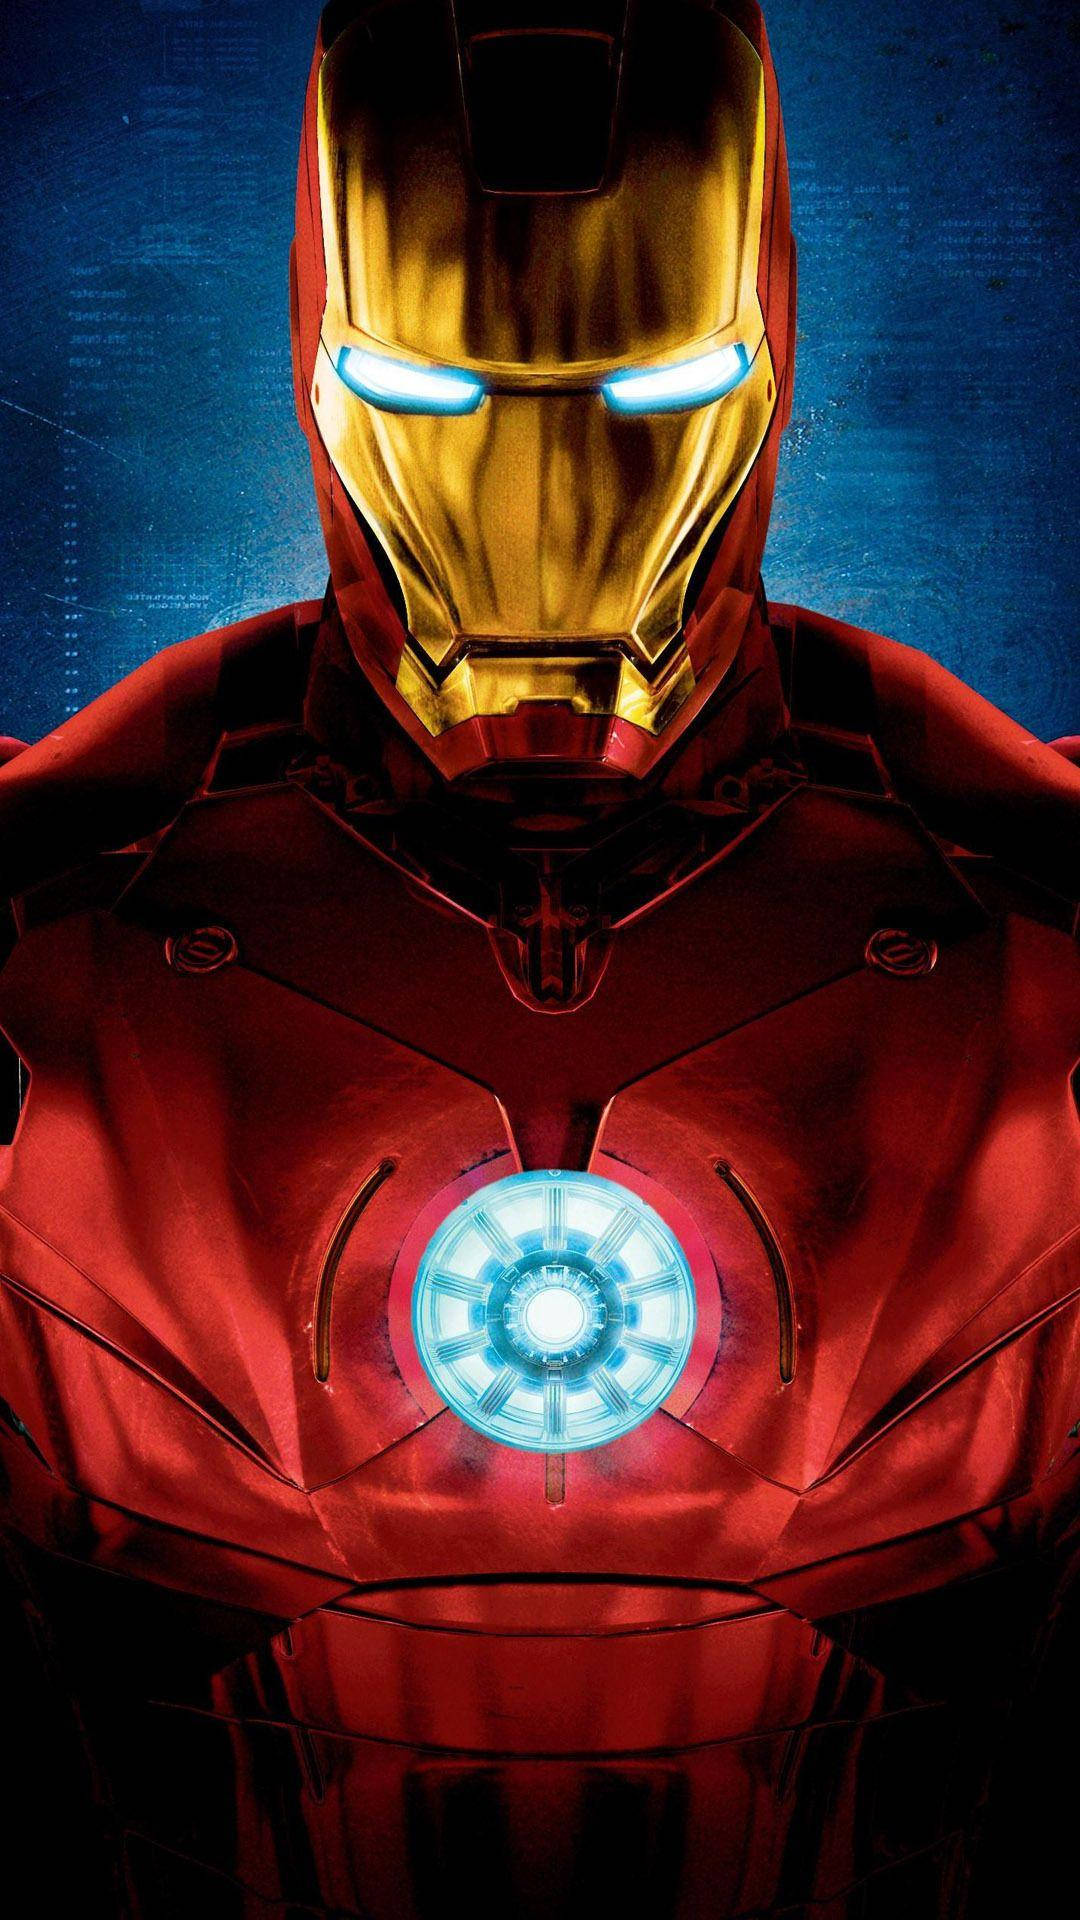 1080p HD Iron Man Mobil Tapet: 1080p HD Iron Mand Mobil Tapet Wallpaper